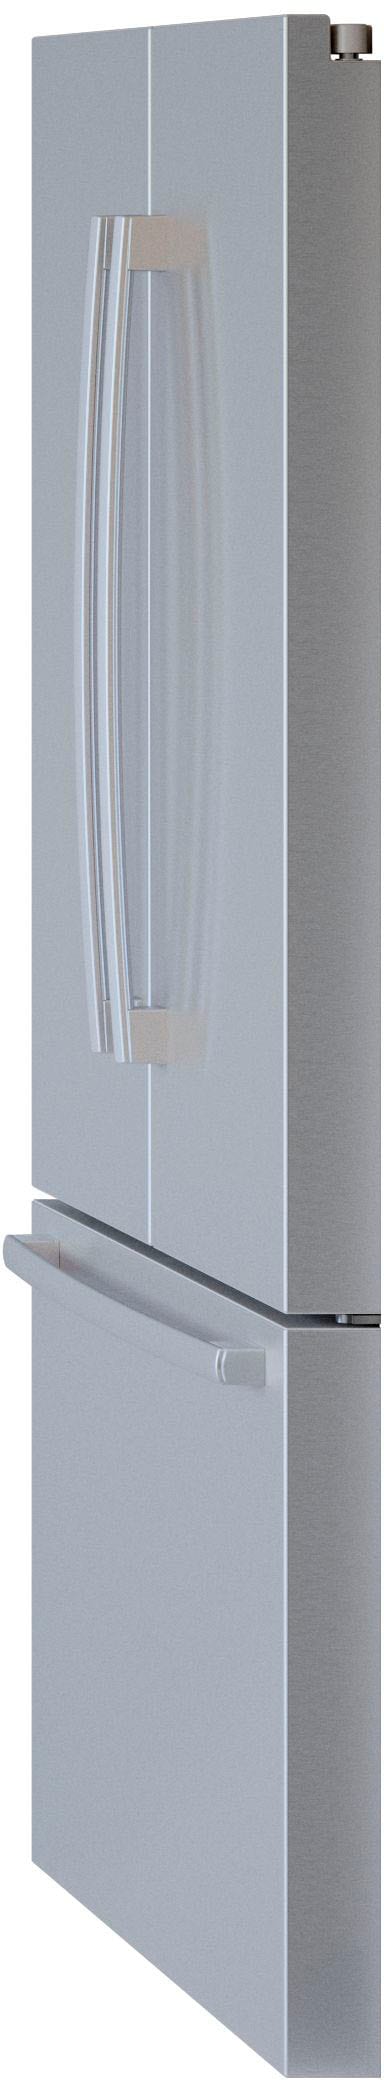 Bosch - 800 Series 21 Cu. Ft. French Door Counter-Depth Smart Refrigerator - Stainless steel_8